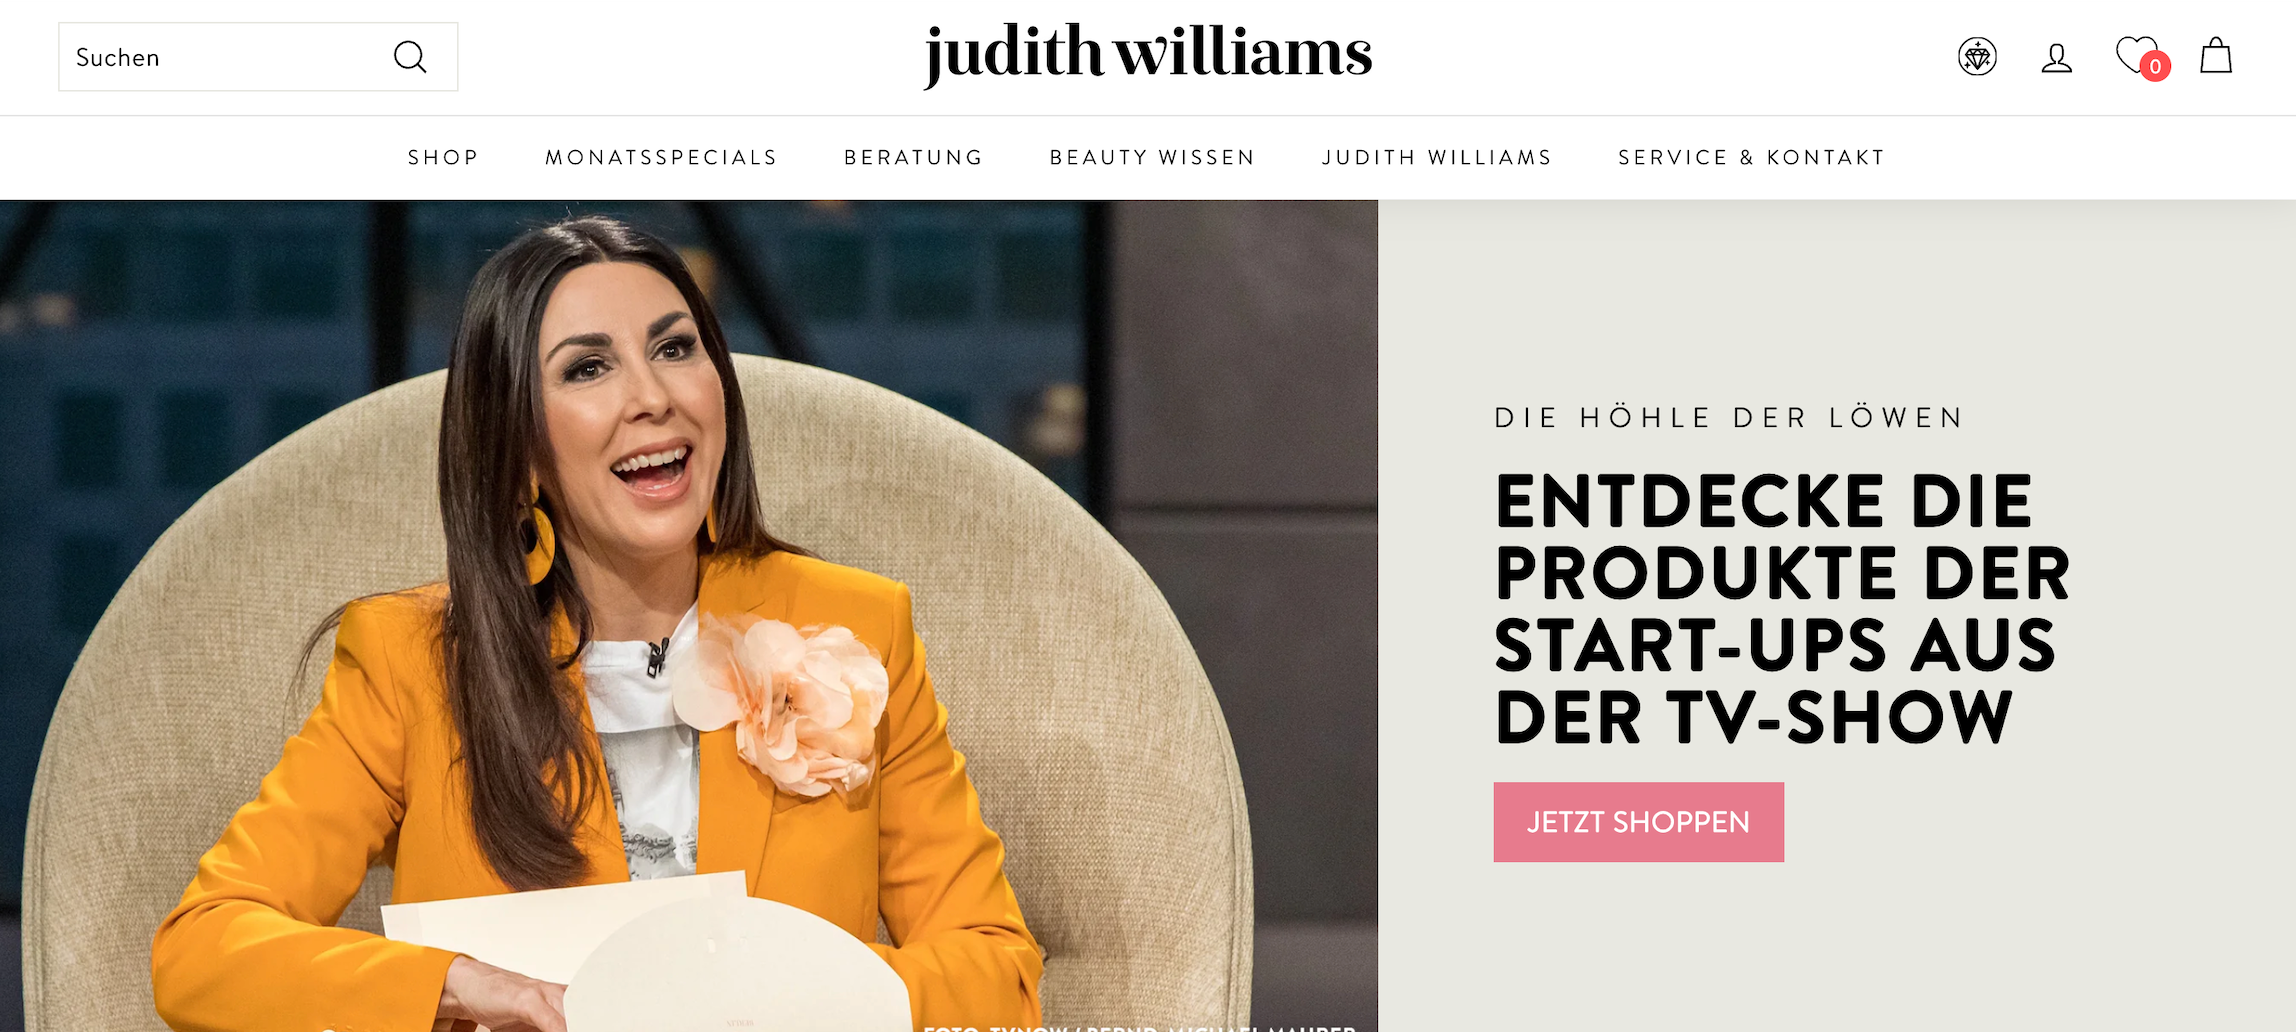 Judith Williams Cosmetics